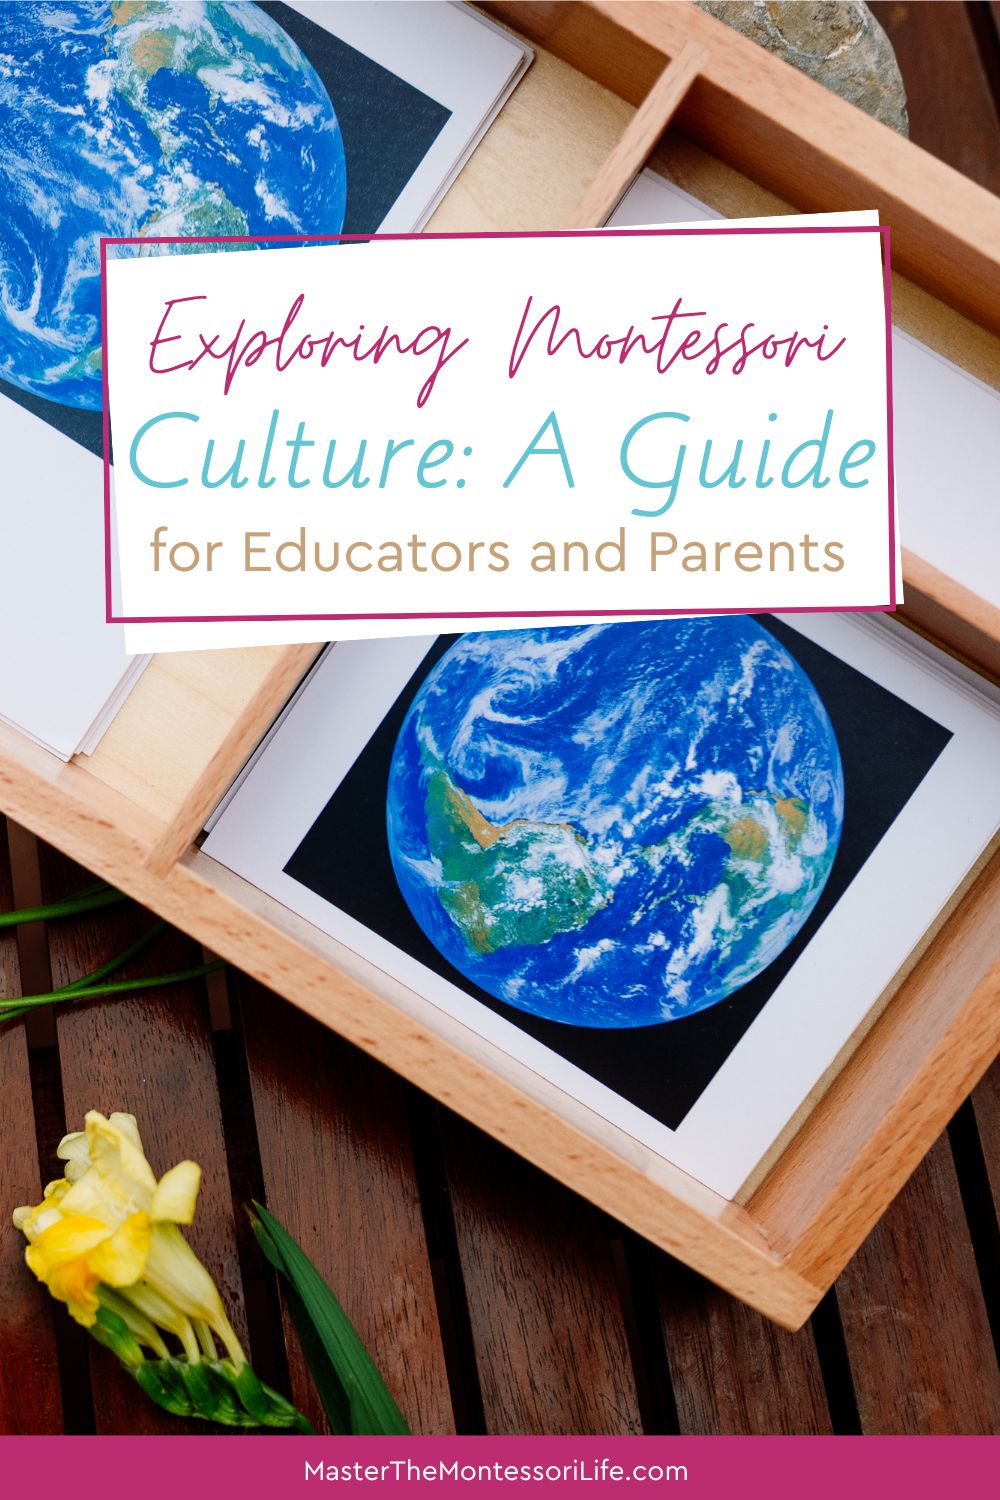 Exploring Montessori Culture: A Guide for Educators and Parents